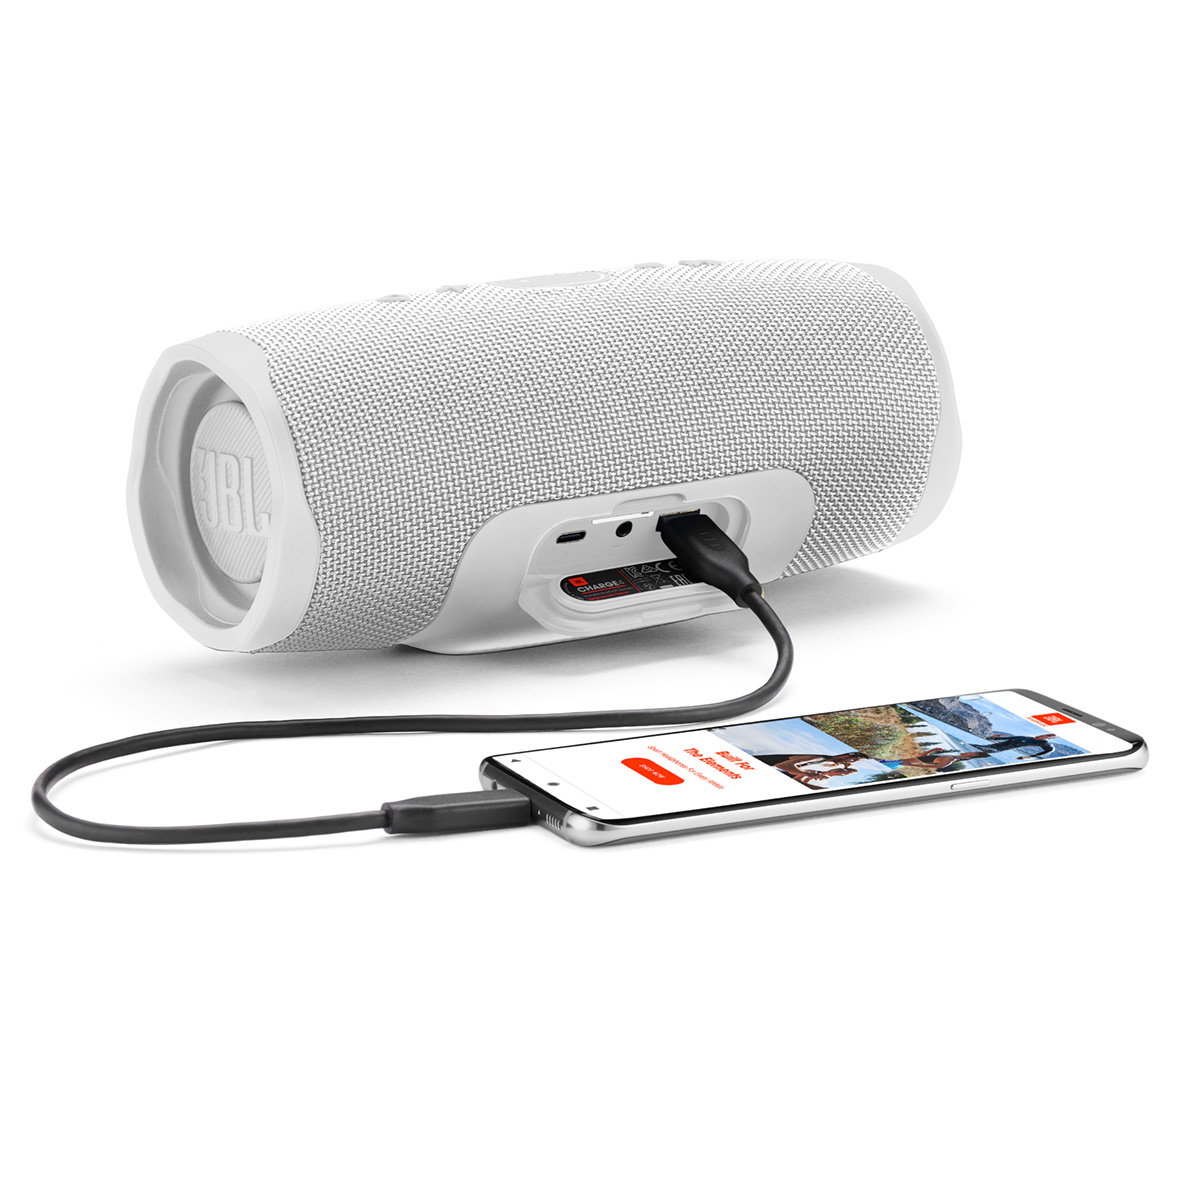 JBL Charge 4 Portable Waterproof Wireless Bluetooth Speaker - White - image 3 of 7